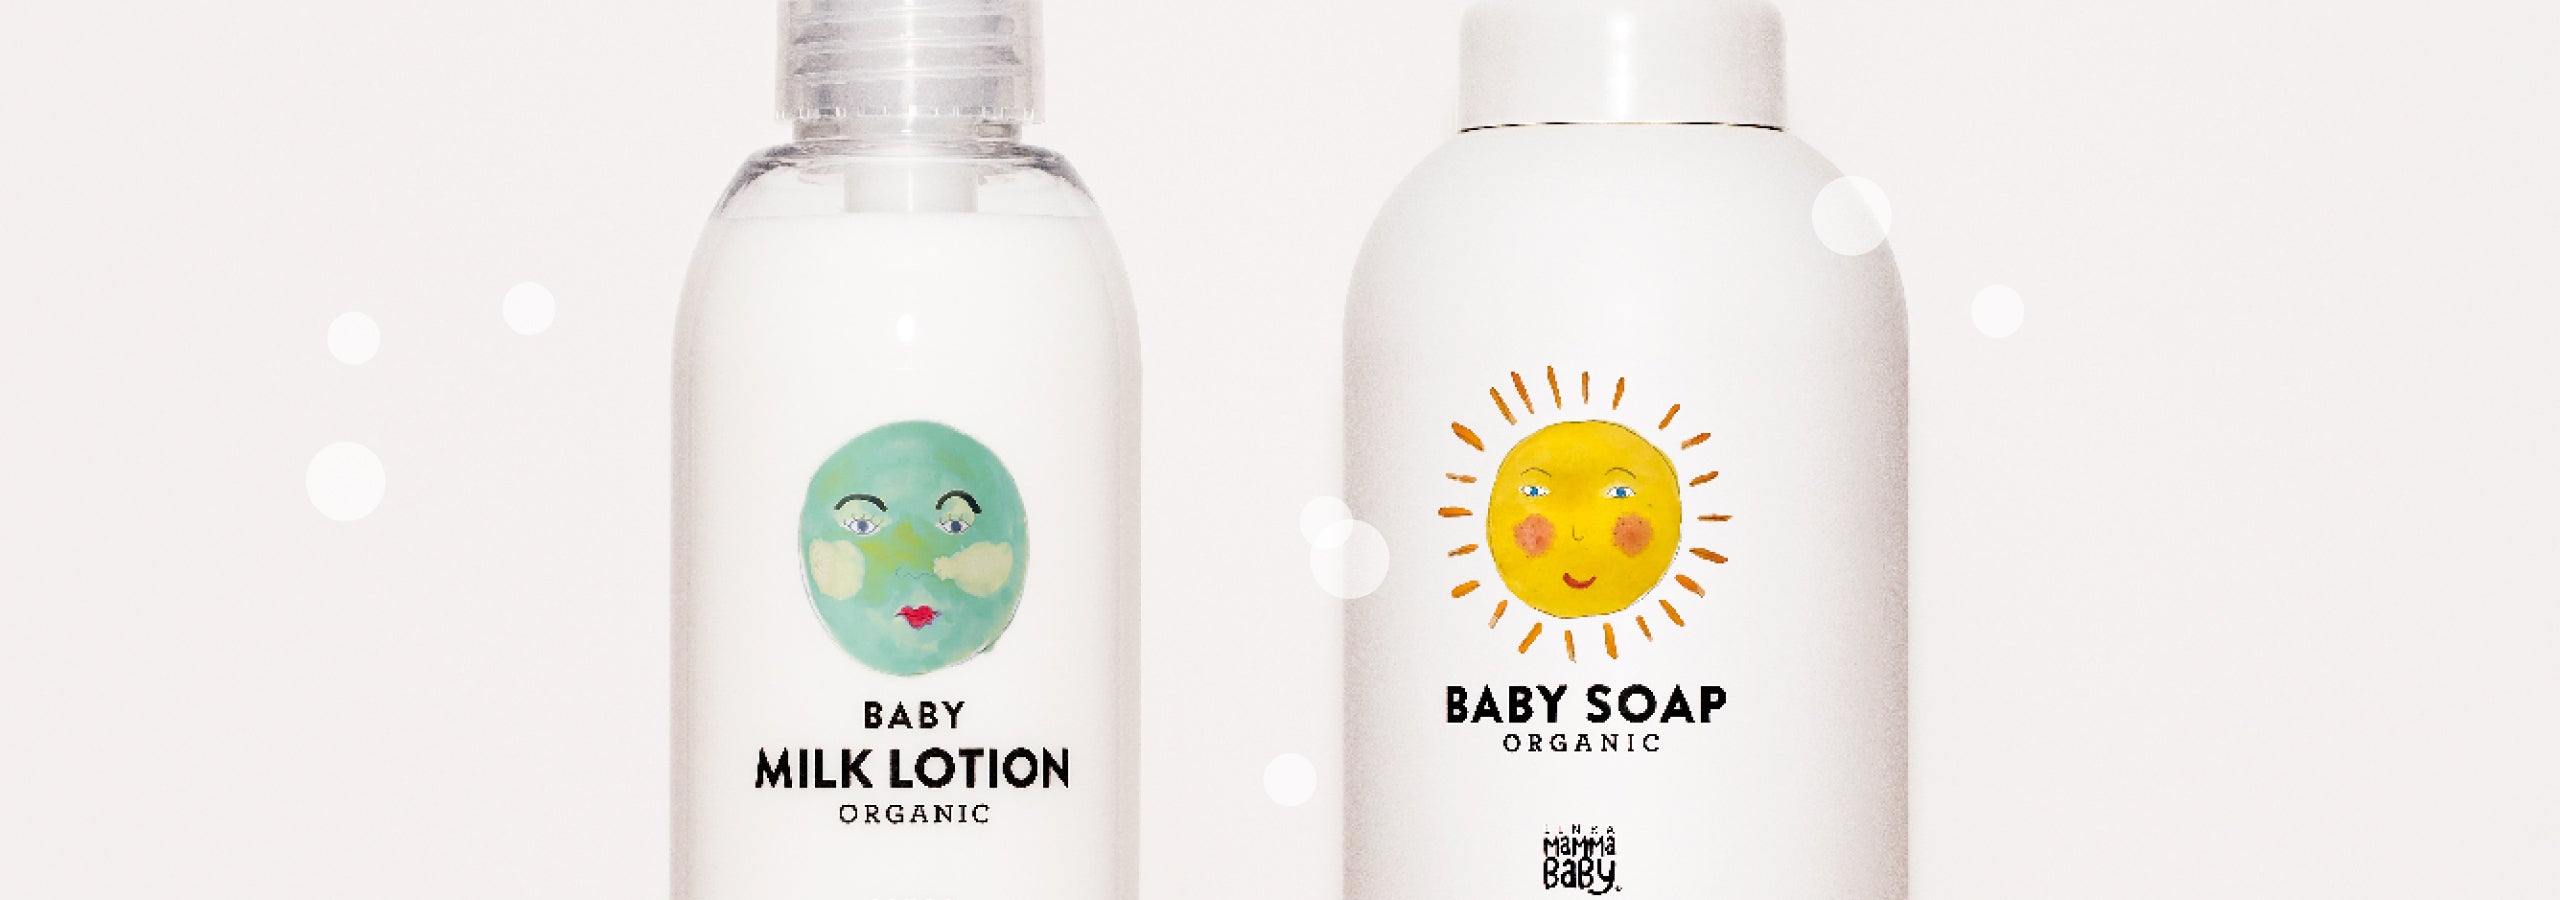 MILK LOTION × BABY SOAP VISUAL